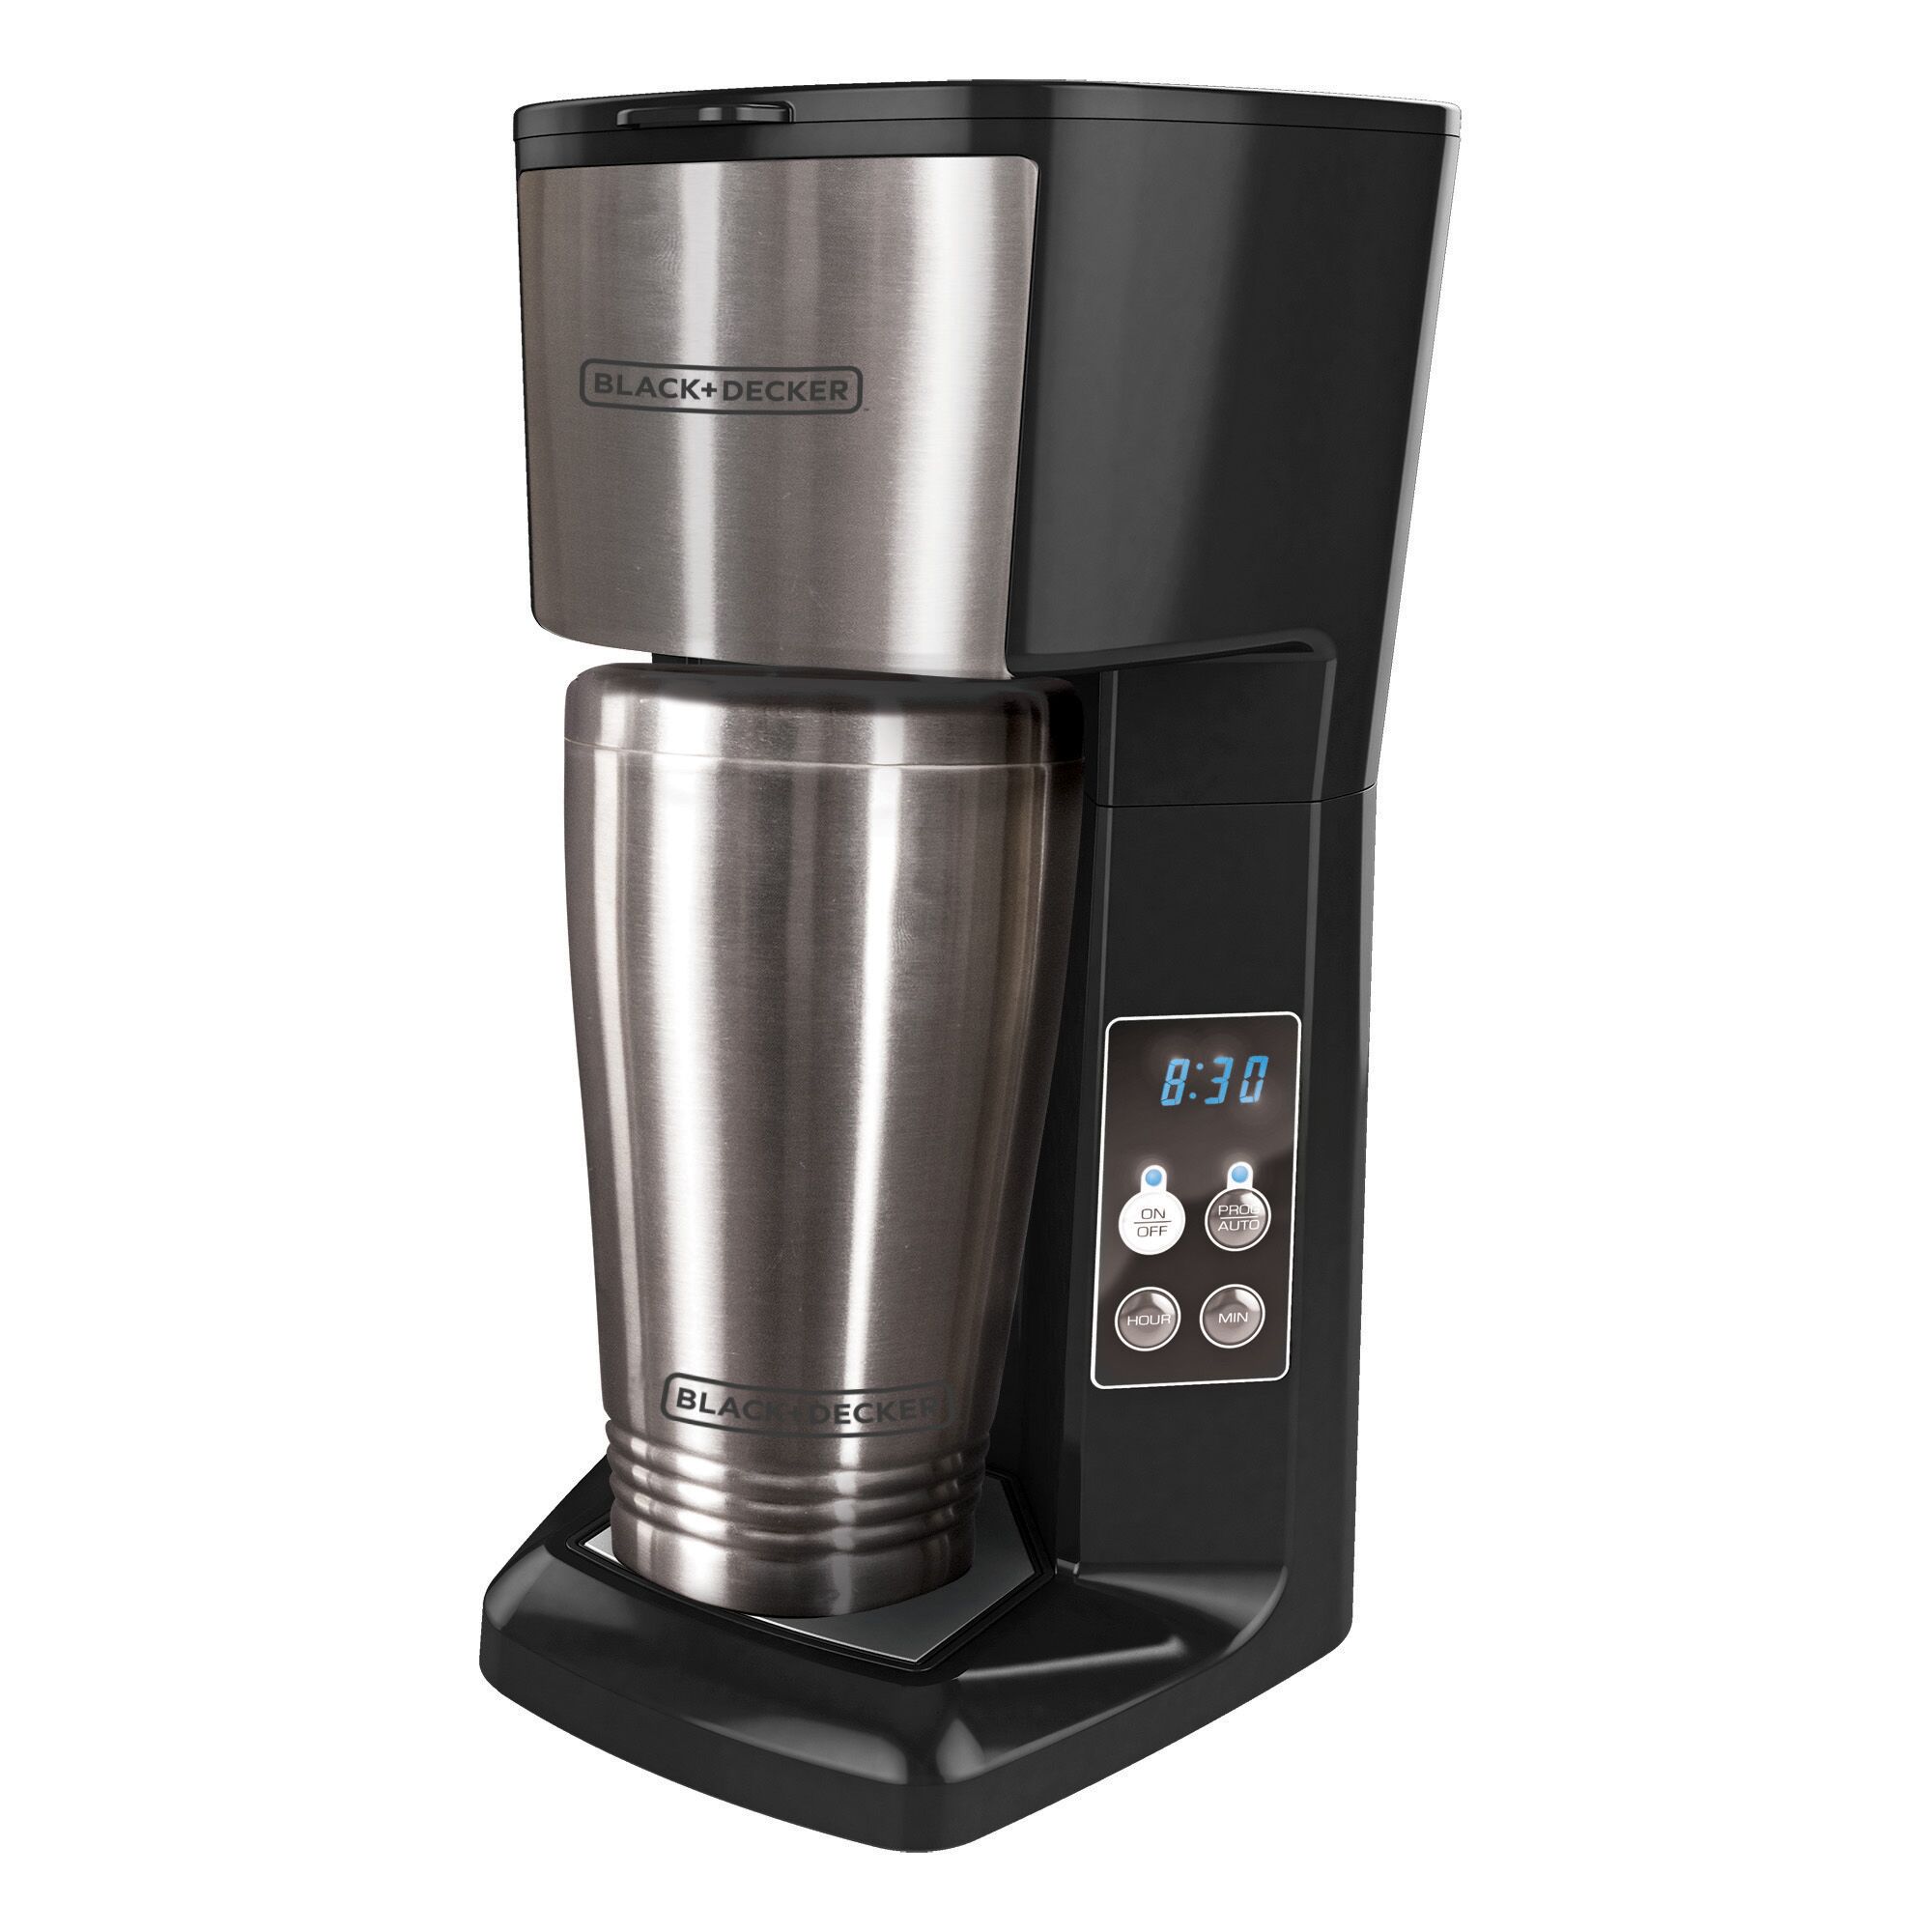 Profile of the BLACK+DECKER single serve coffee maker with travel mug